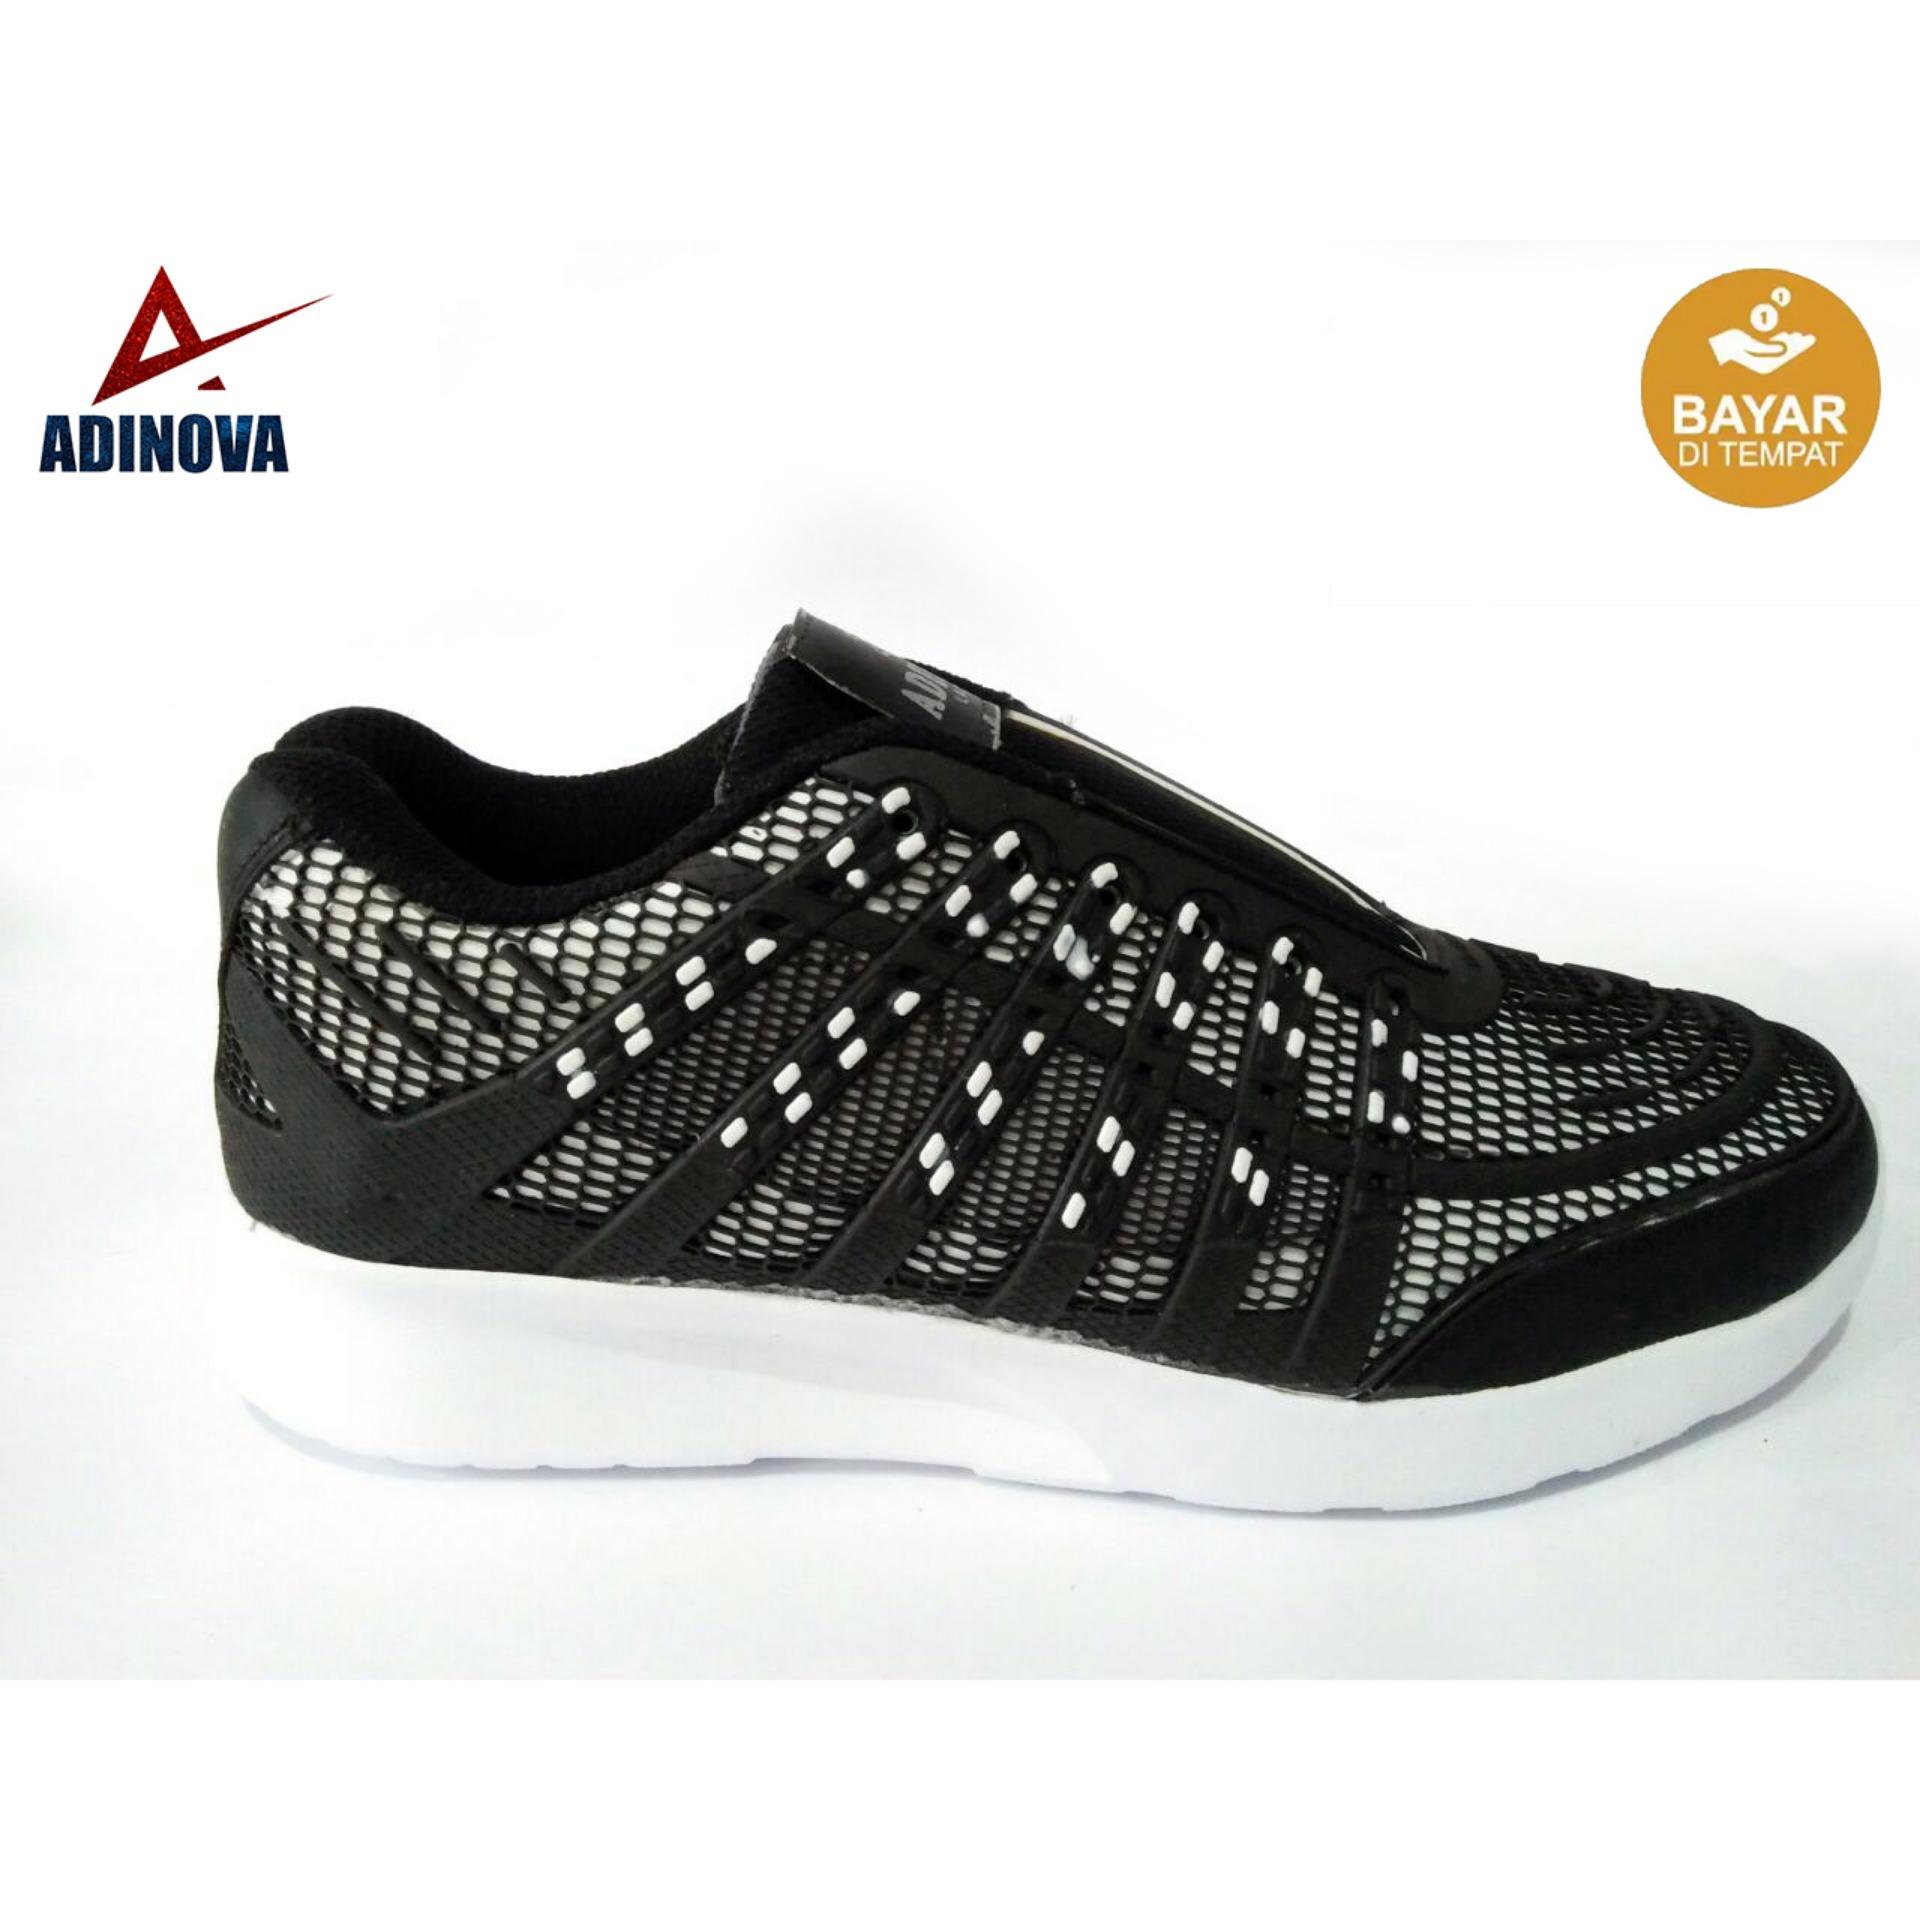 Adinova Shoes Sepatu Sport/Sepatu Olahraga 3D Keren , Nyaman dan Gaya A10